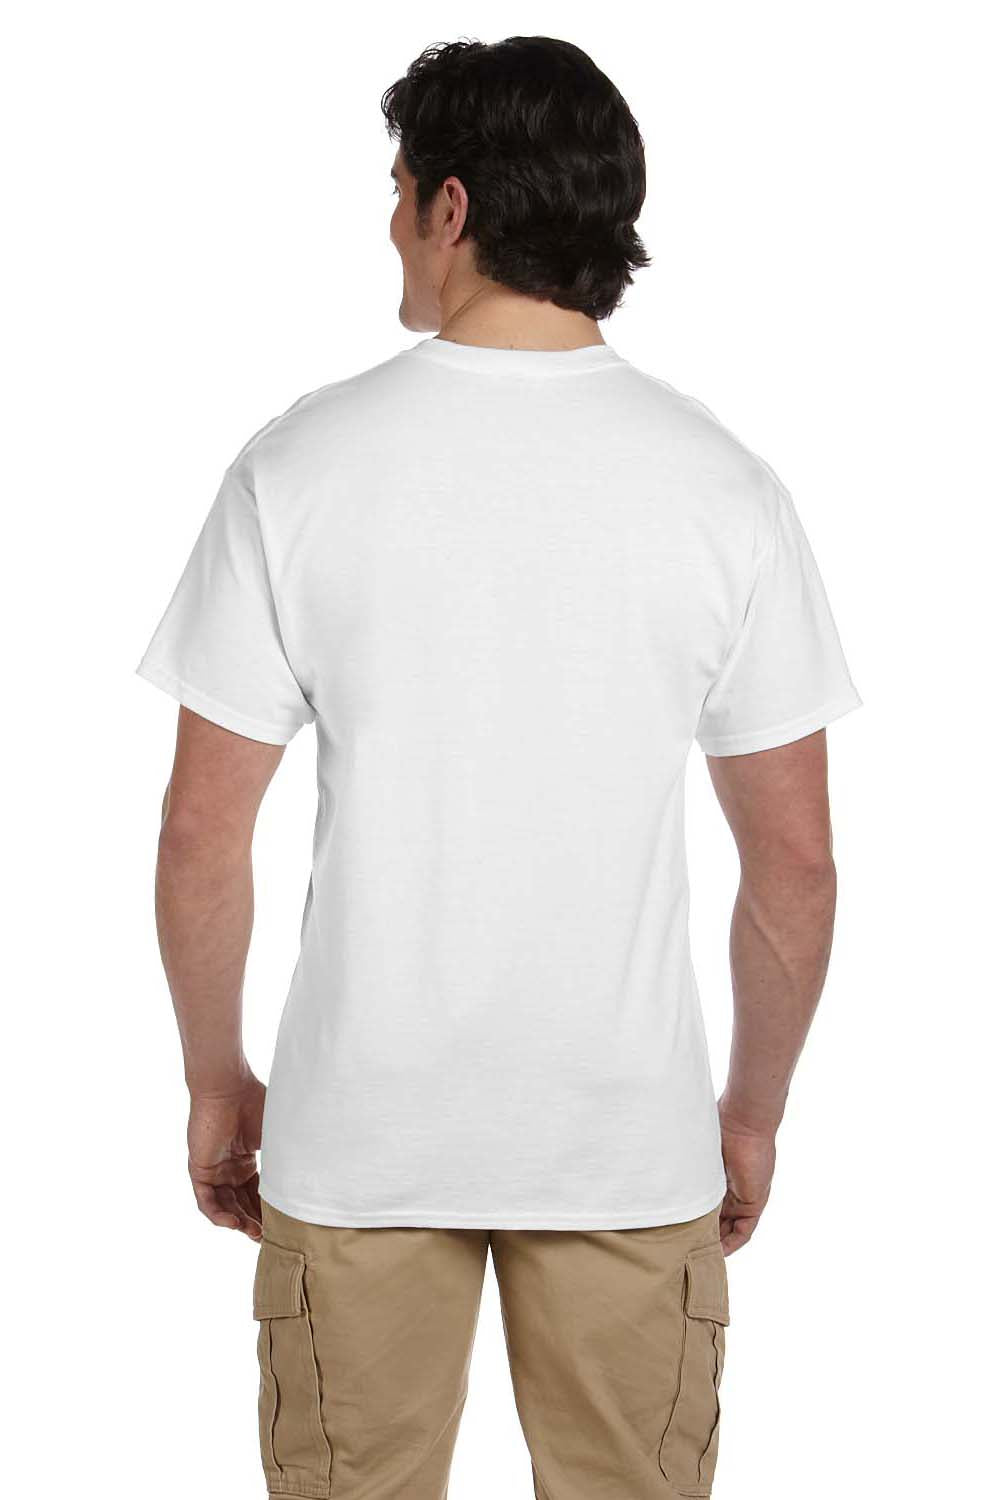 Hanes 5170 Mens EcoSmart Short Sleeve Crewneck T-Shirt White Back